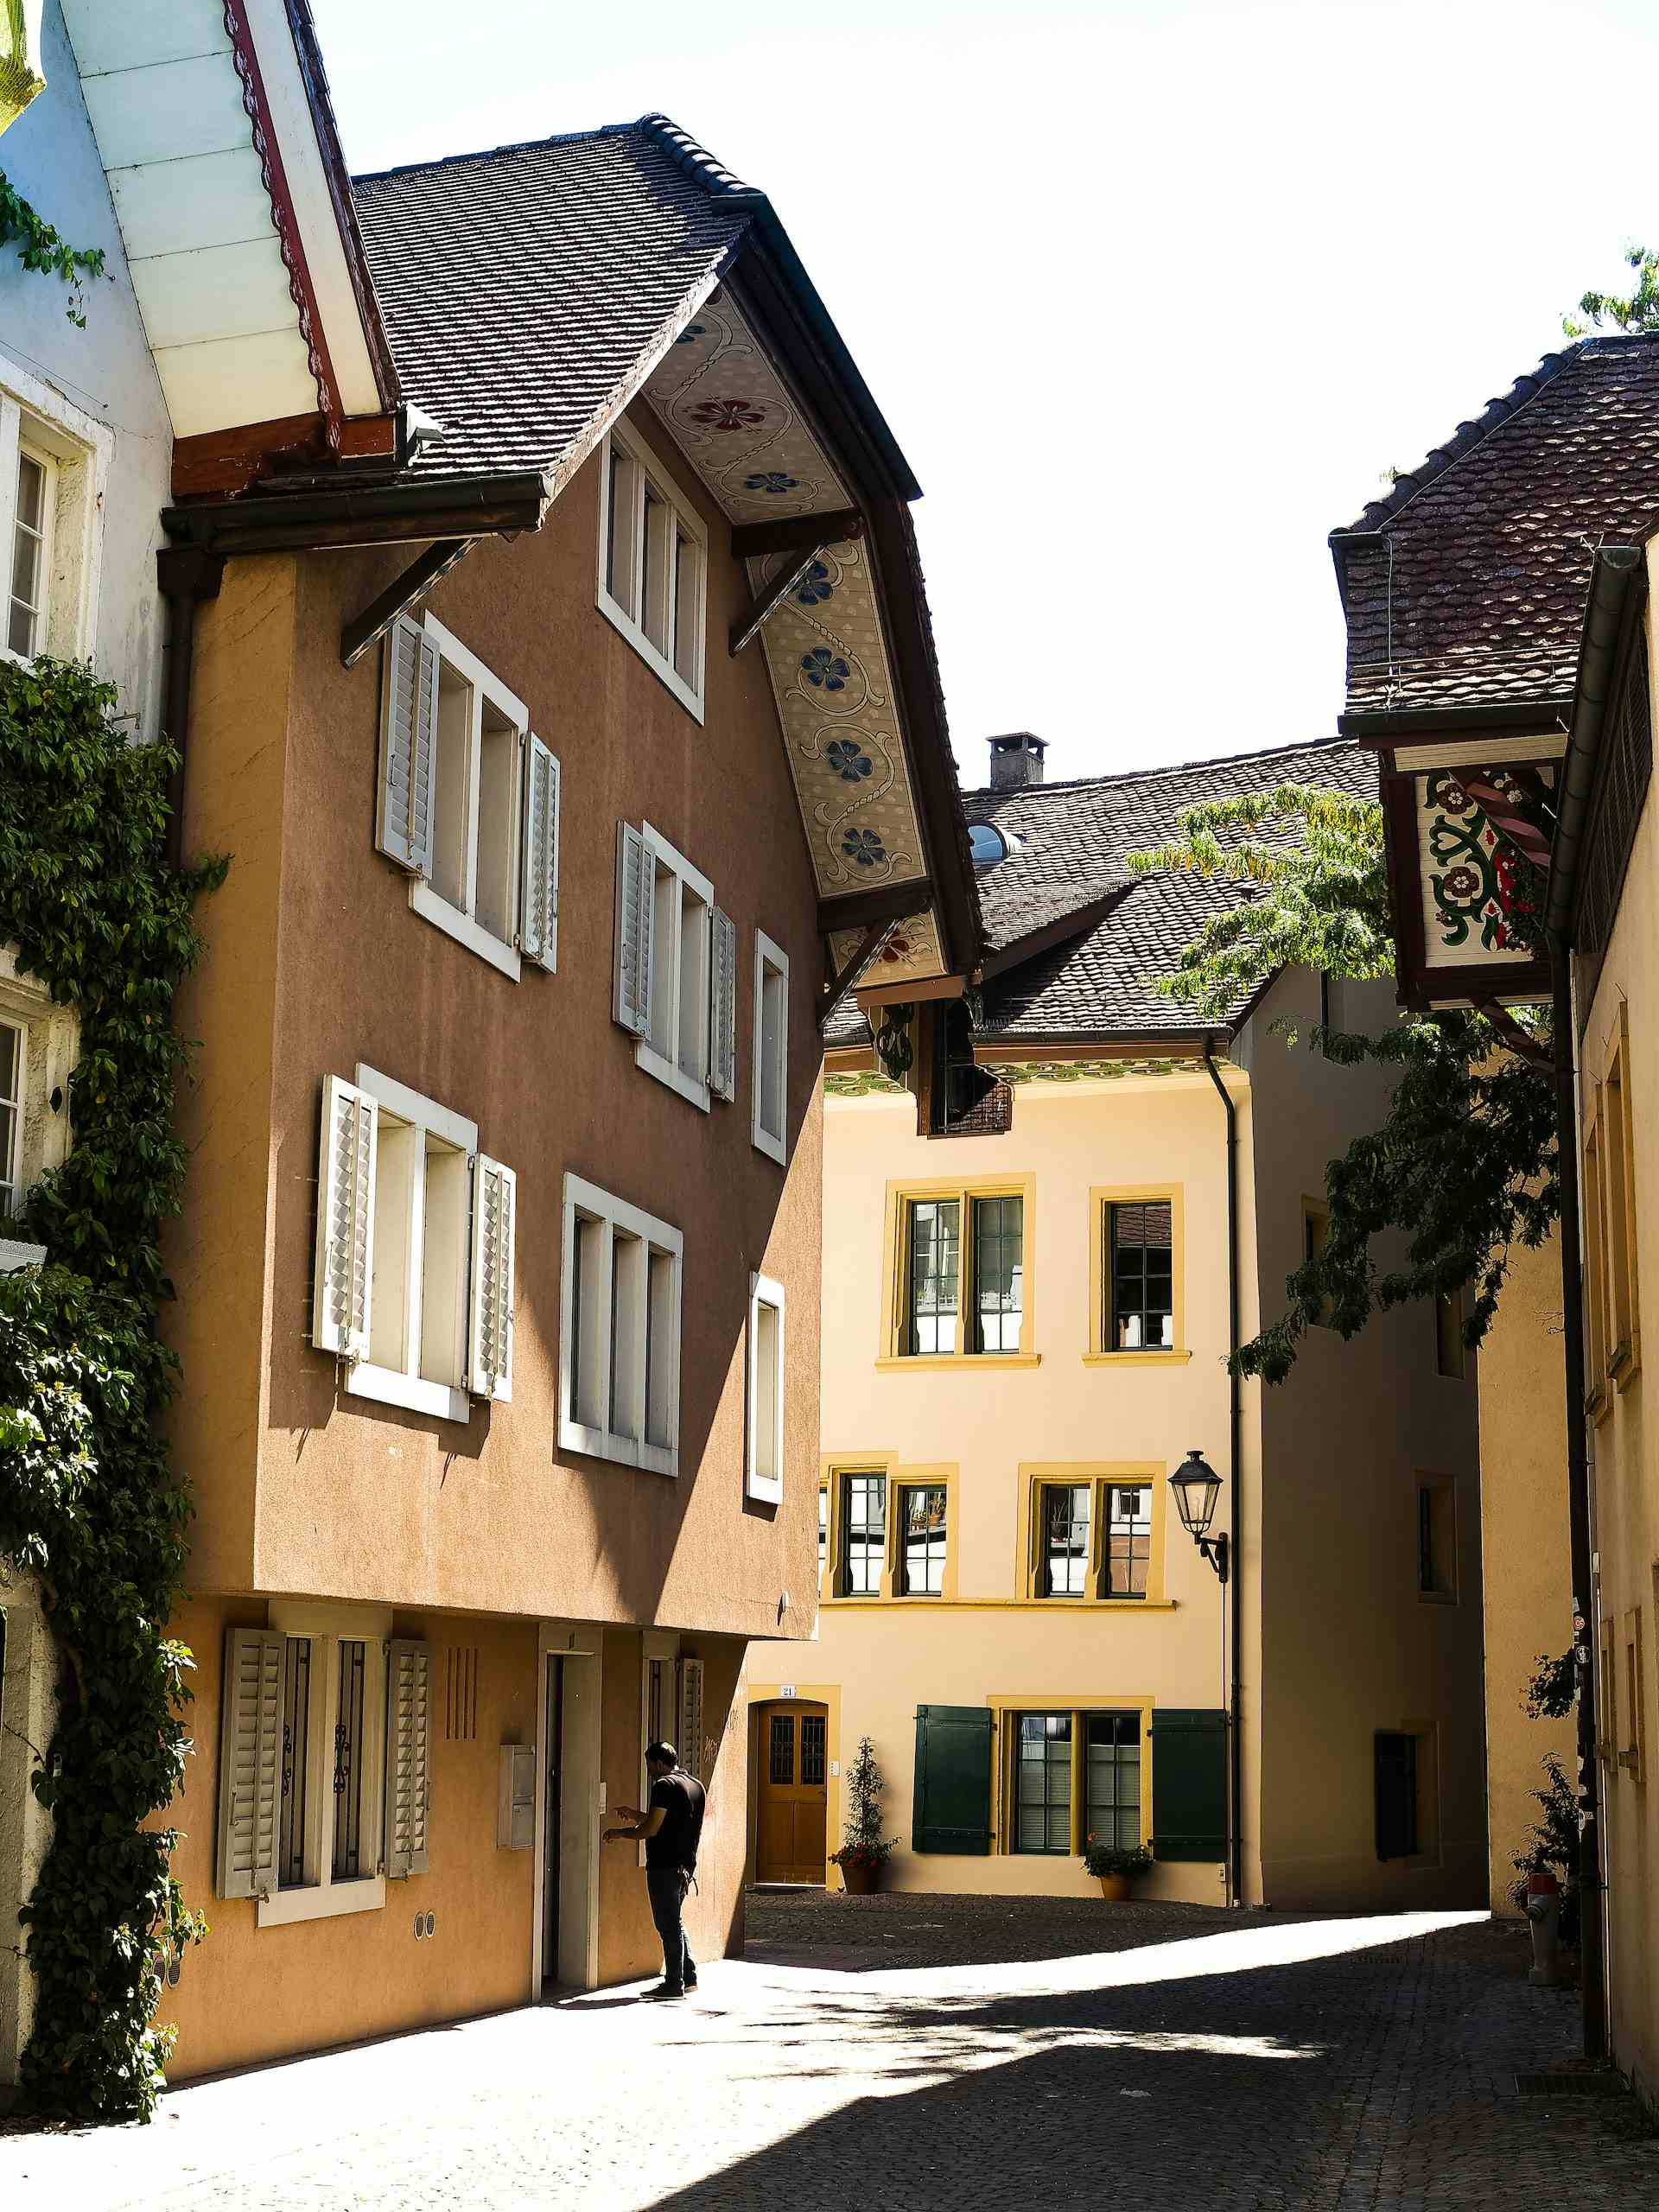 Zublers Hofladen Im Guet, producer in Schafisheim canton of Aargau in Switzerland